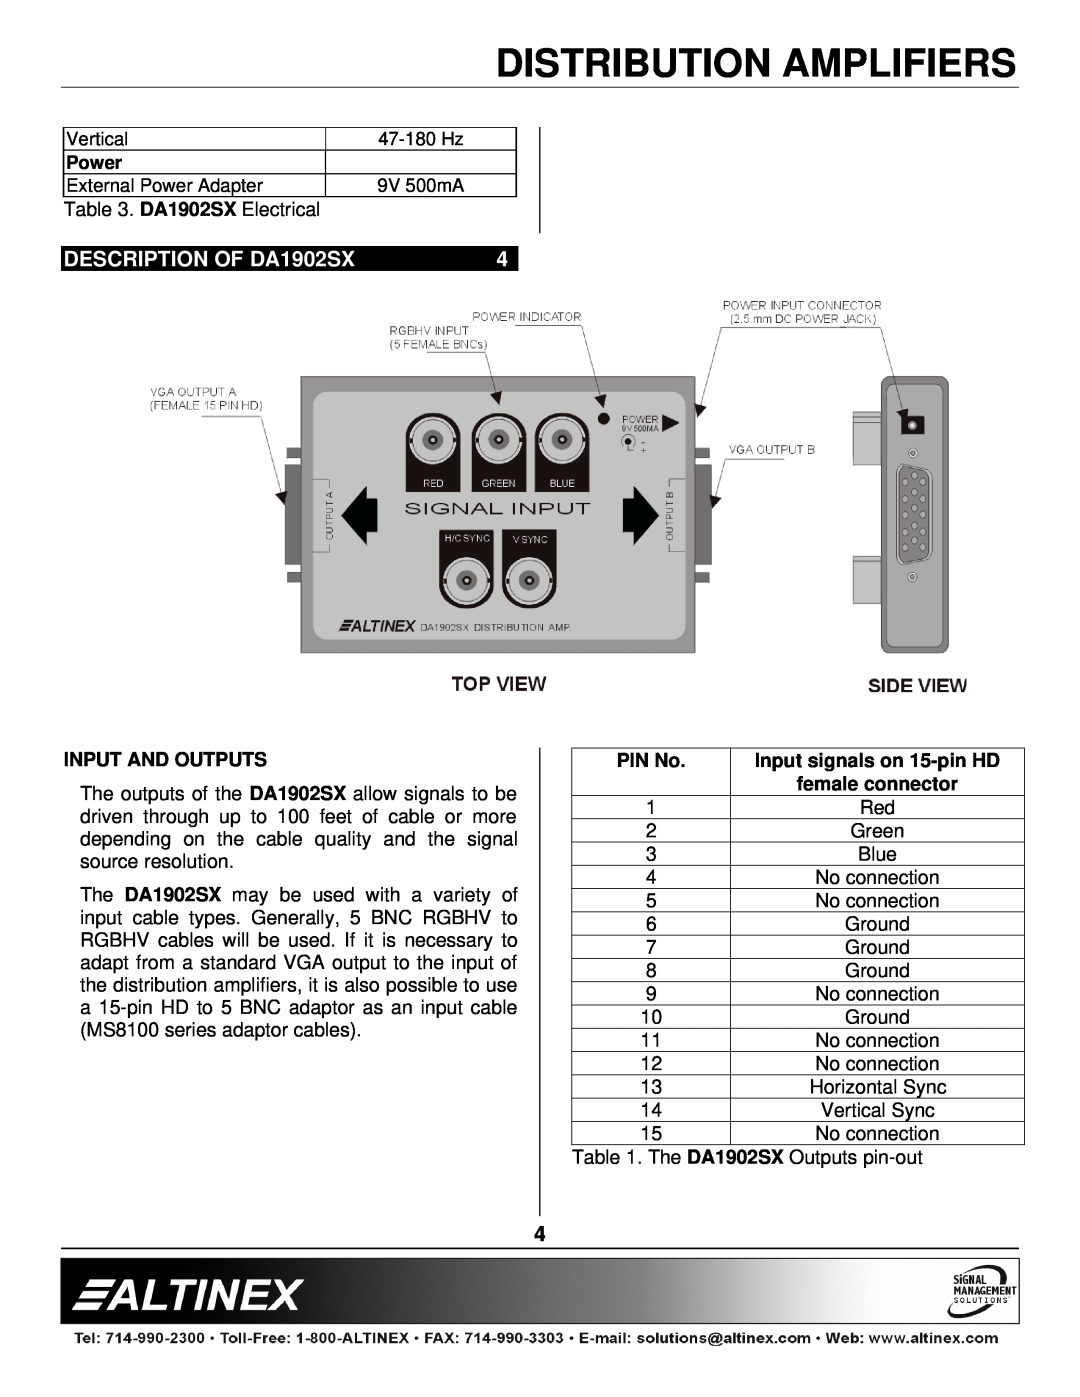 Altinex manual DESCRIPTION OF DA1902SX, Input And Outputs, PIN No, Input signals on 15-pinHD, Distribution Amplifiers 